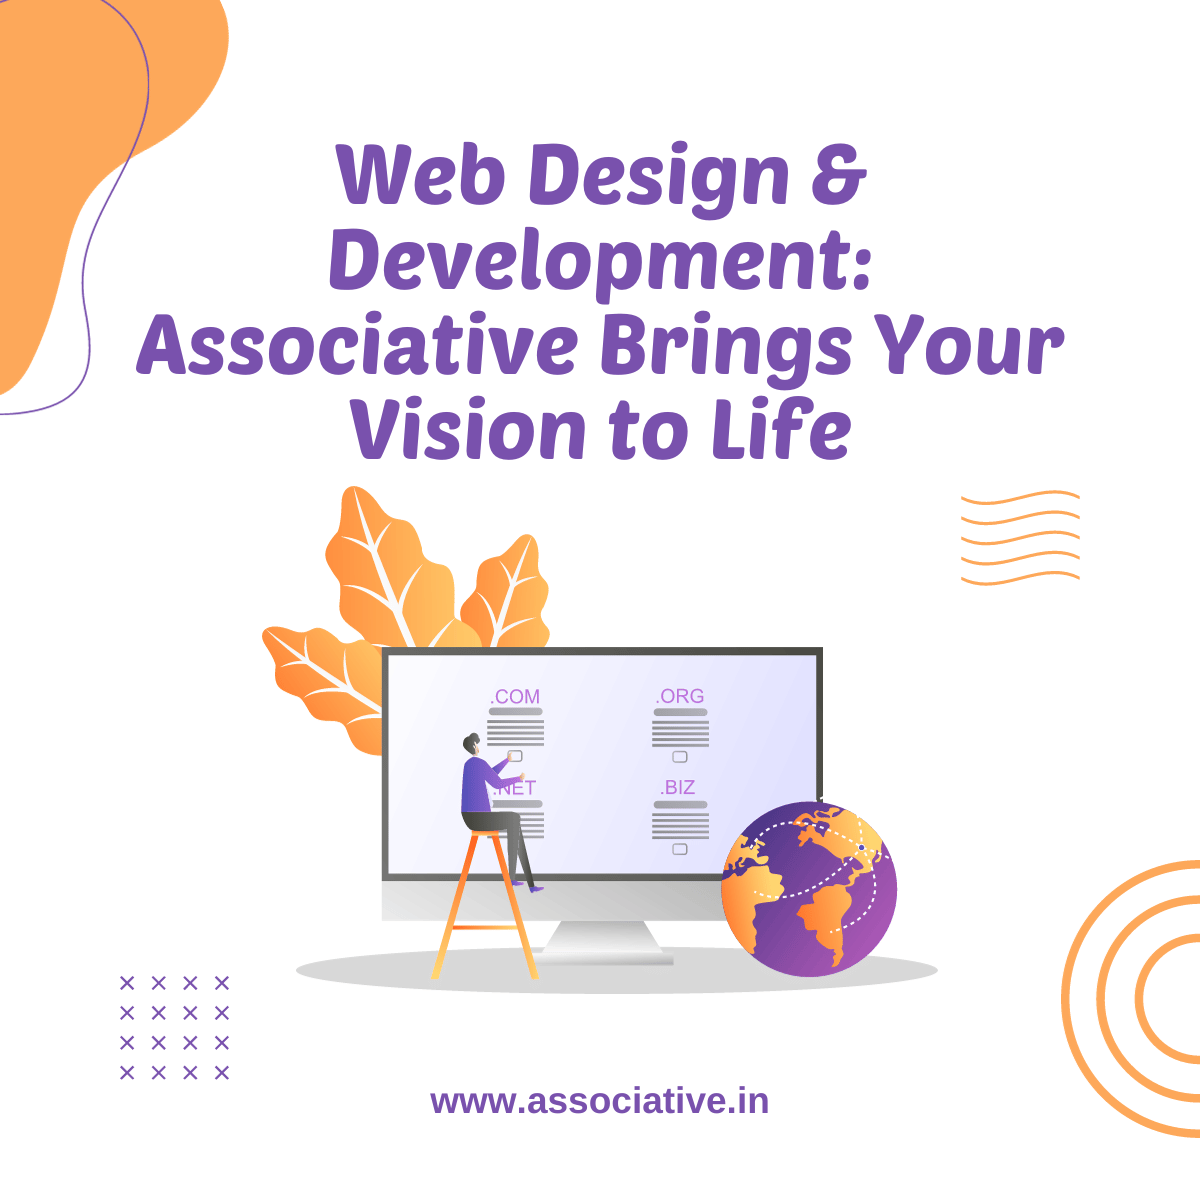 Web Design & Development: Associative Brings Your Vision to Life